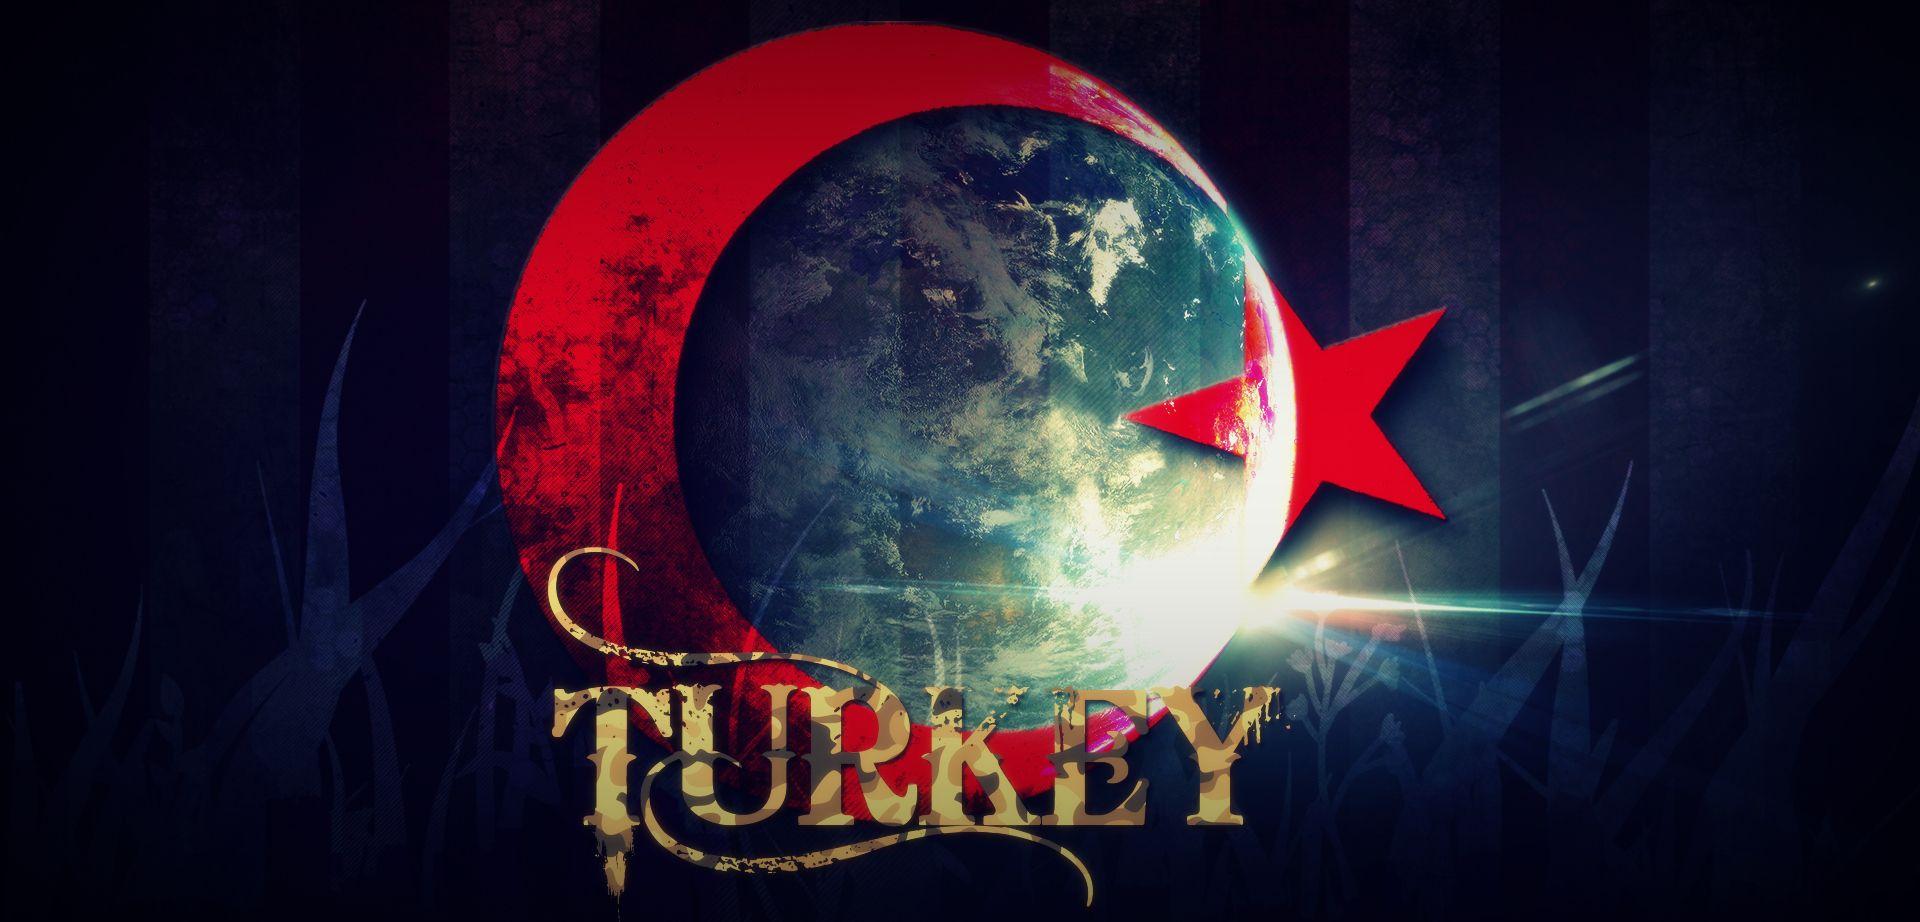 Turkey Wallpaper, Full HD 1080p, Best HD Turkey Picture, GuoGuiyan